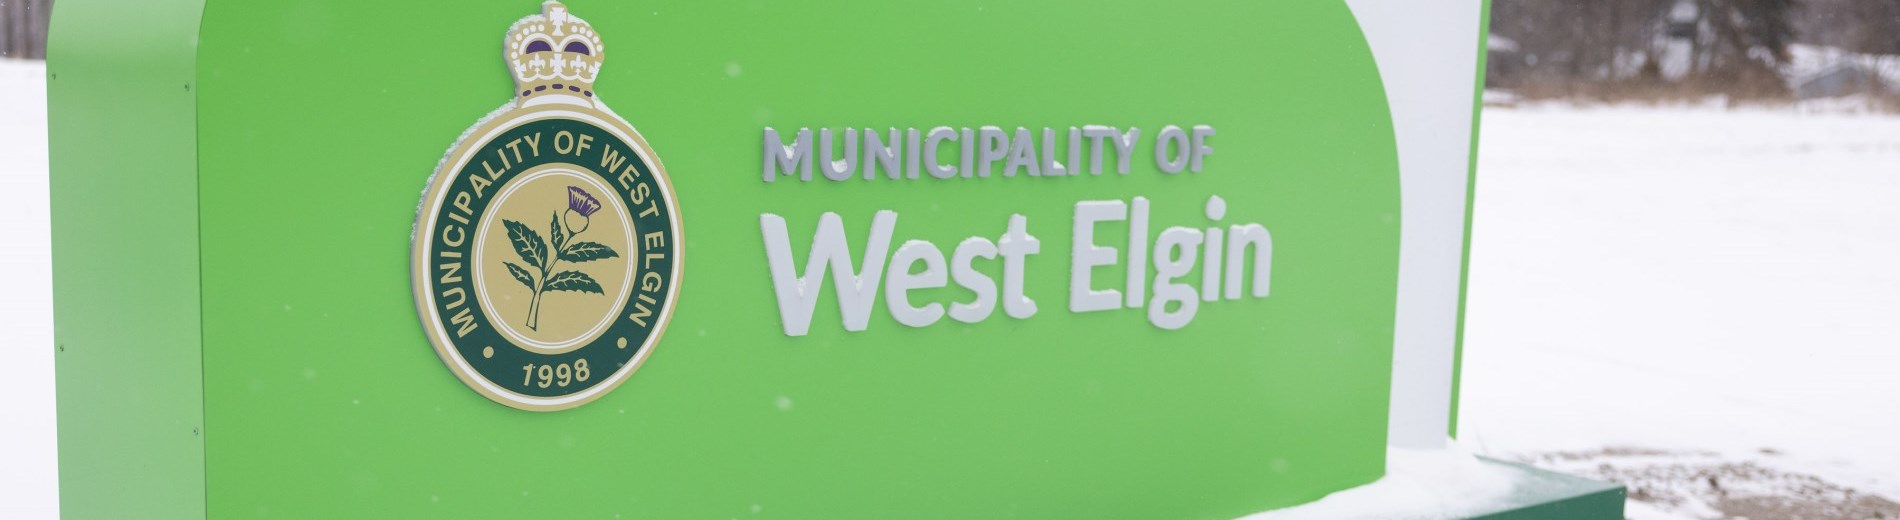 Municipality of West Elgin